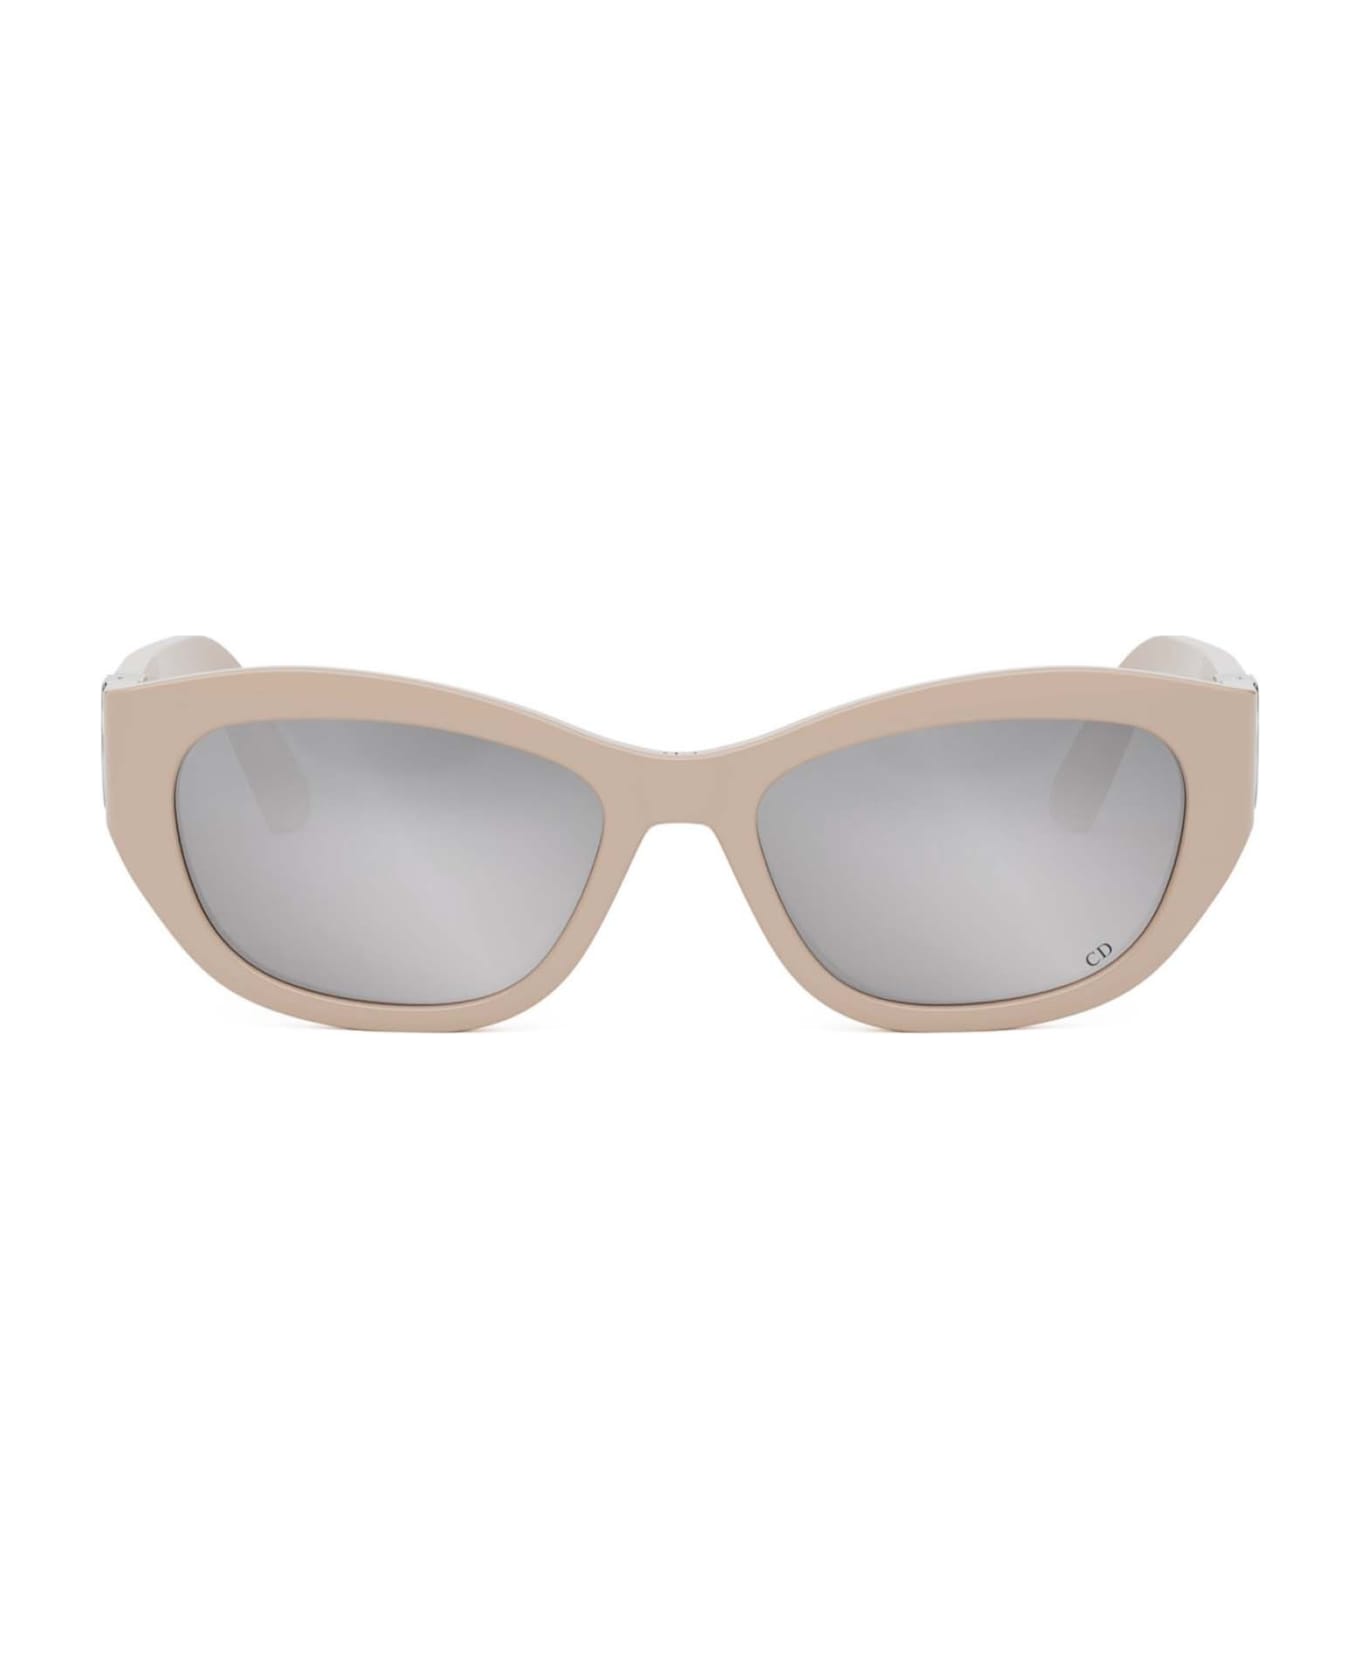 Dior Eyewear Sunglasses - Cipria/Silver サングラス